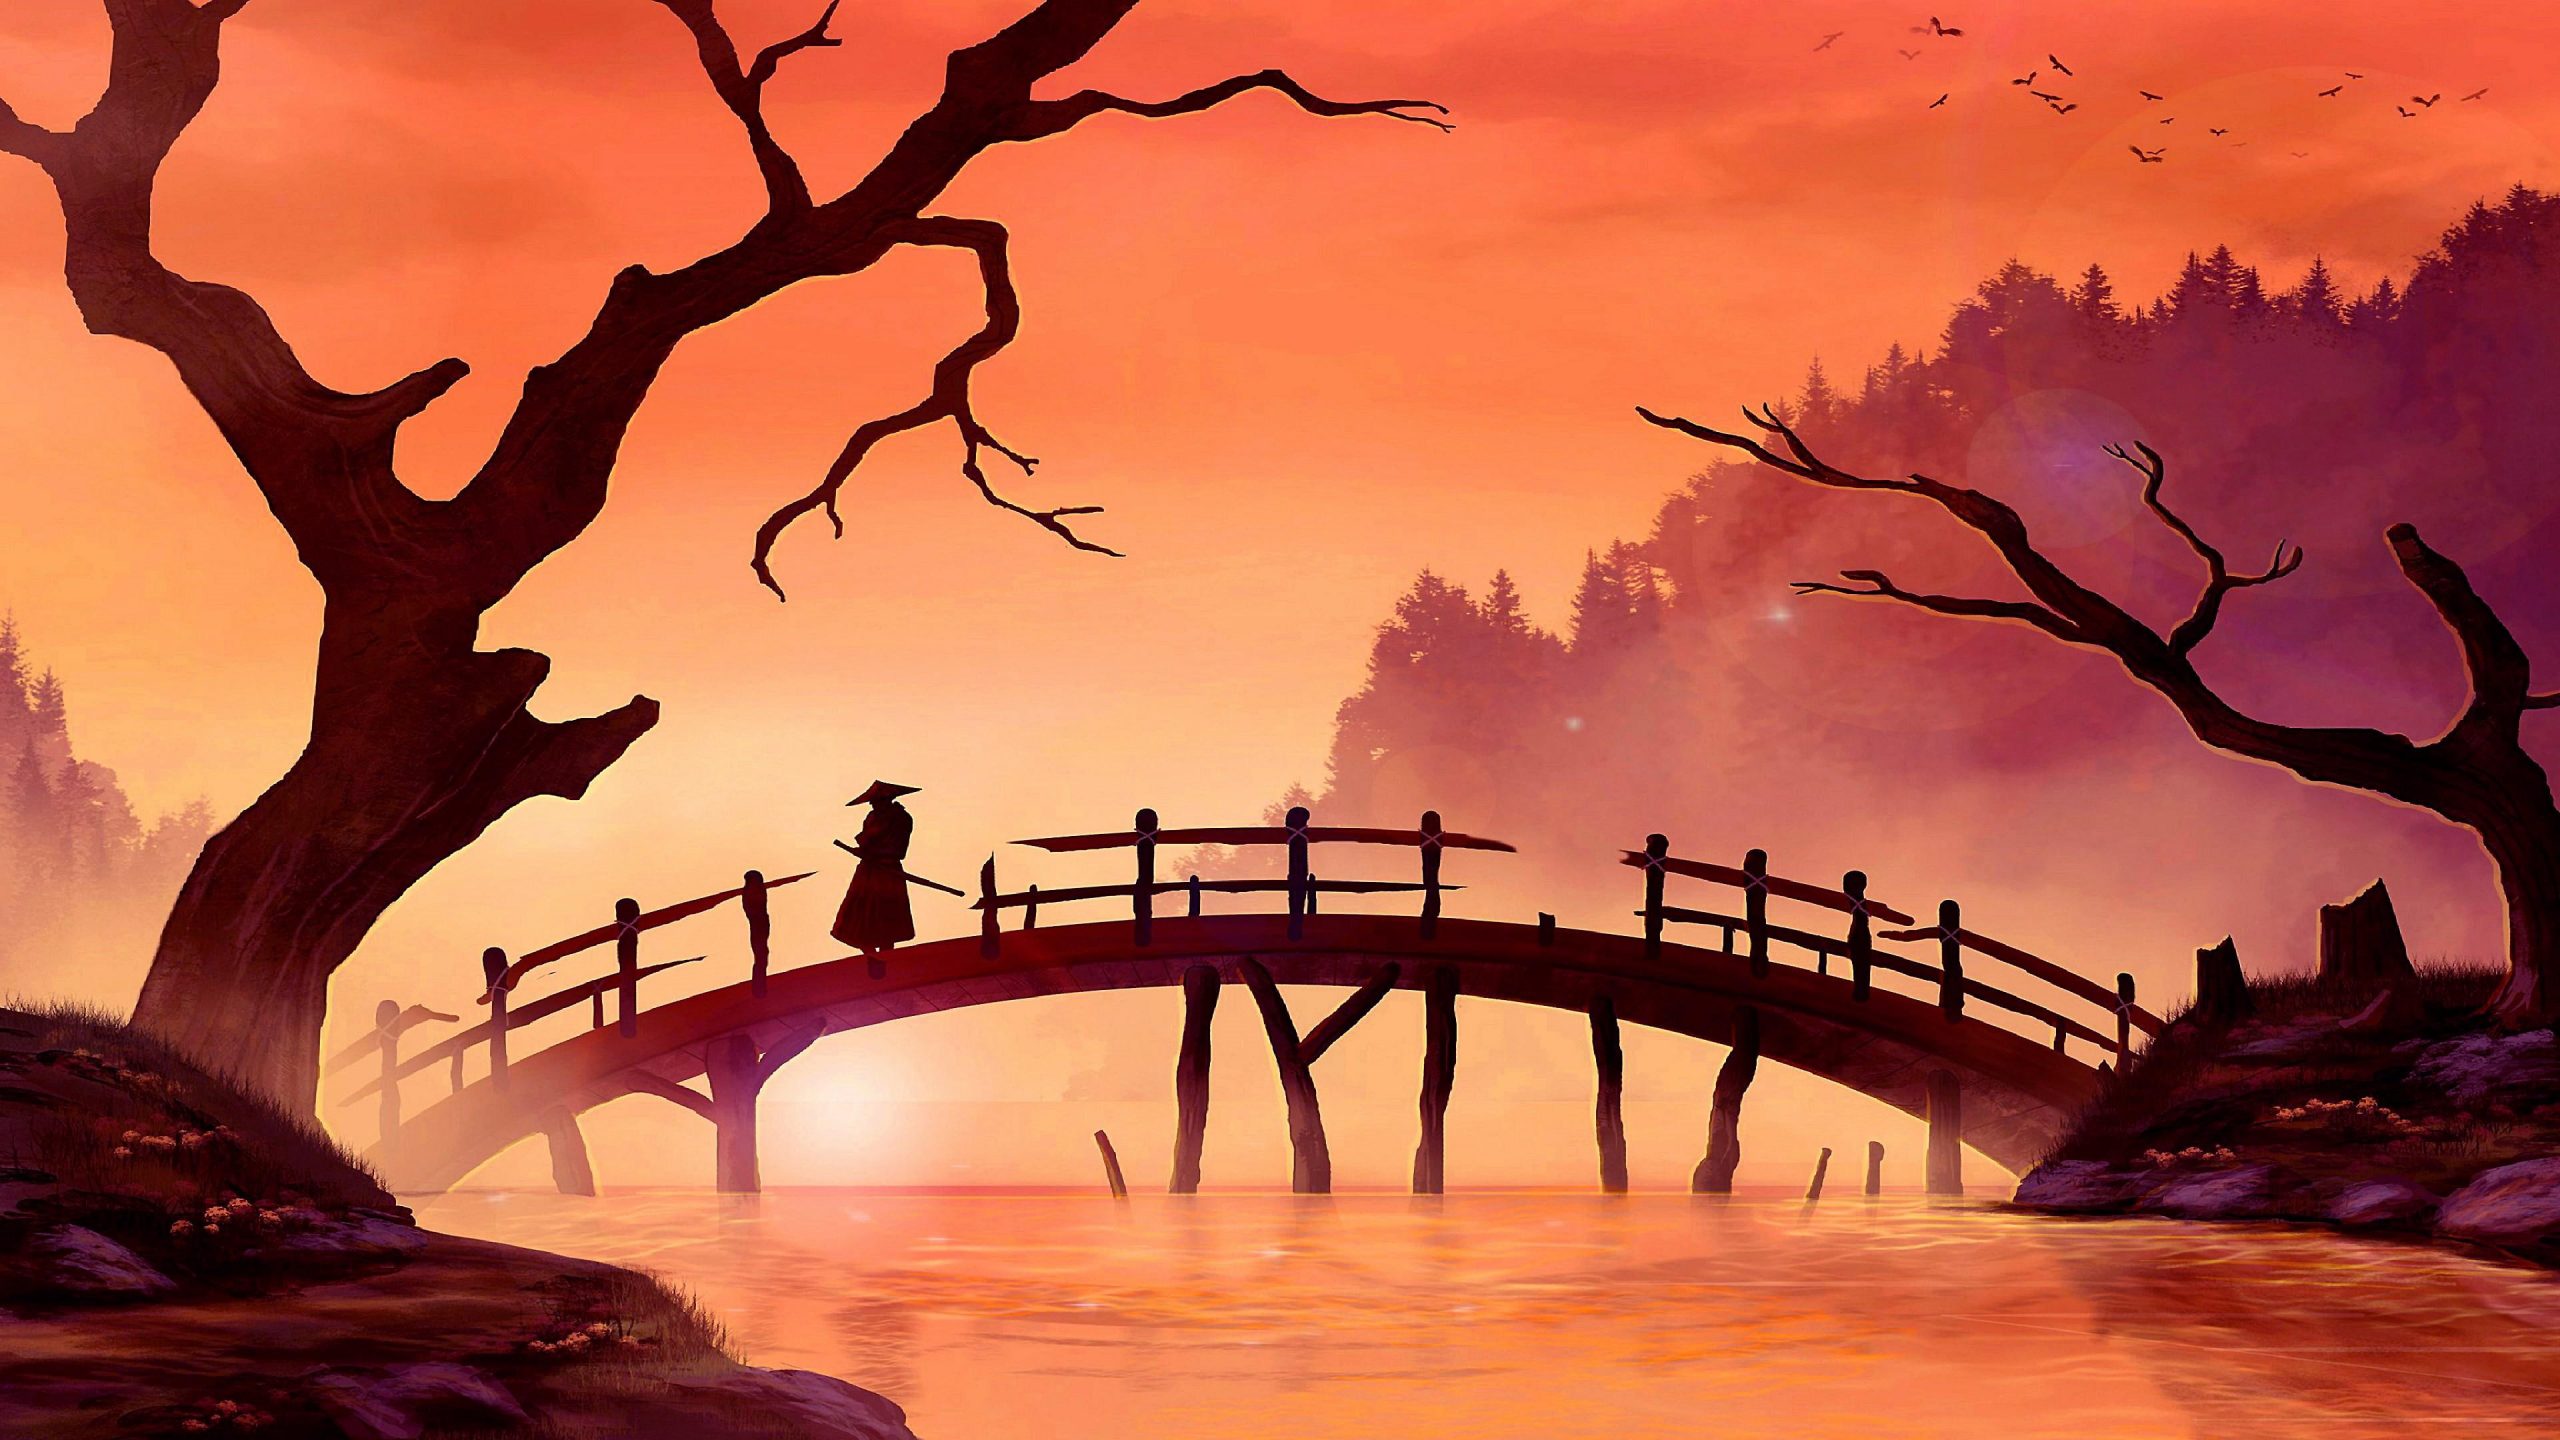 Samurai, bridge, painting art, sunset, river, landscape, branch